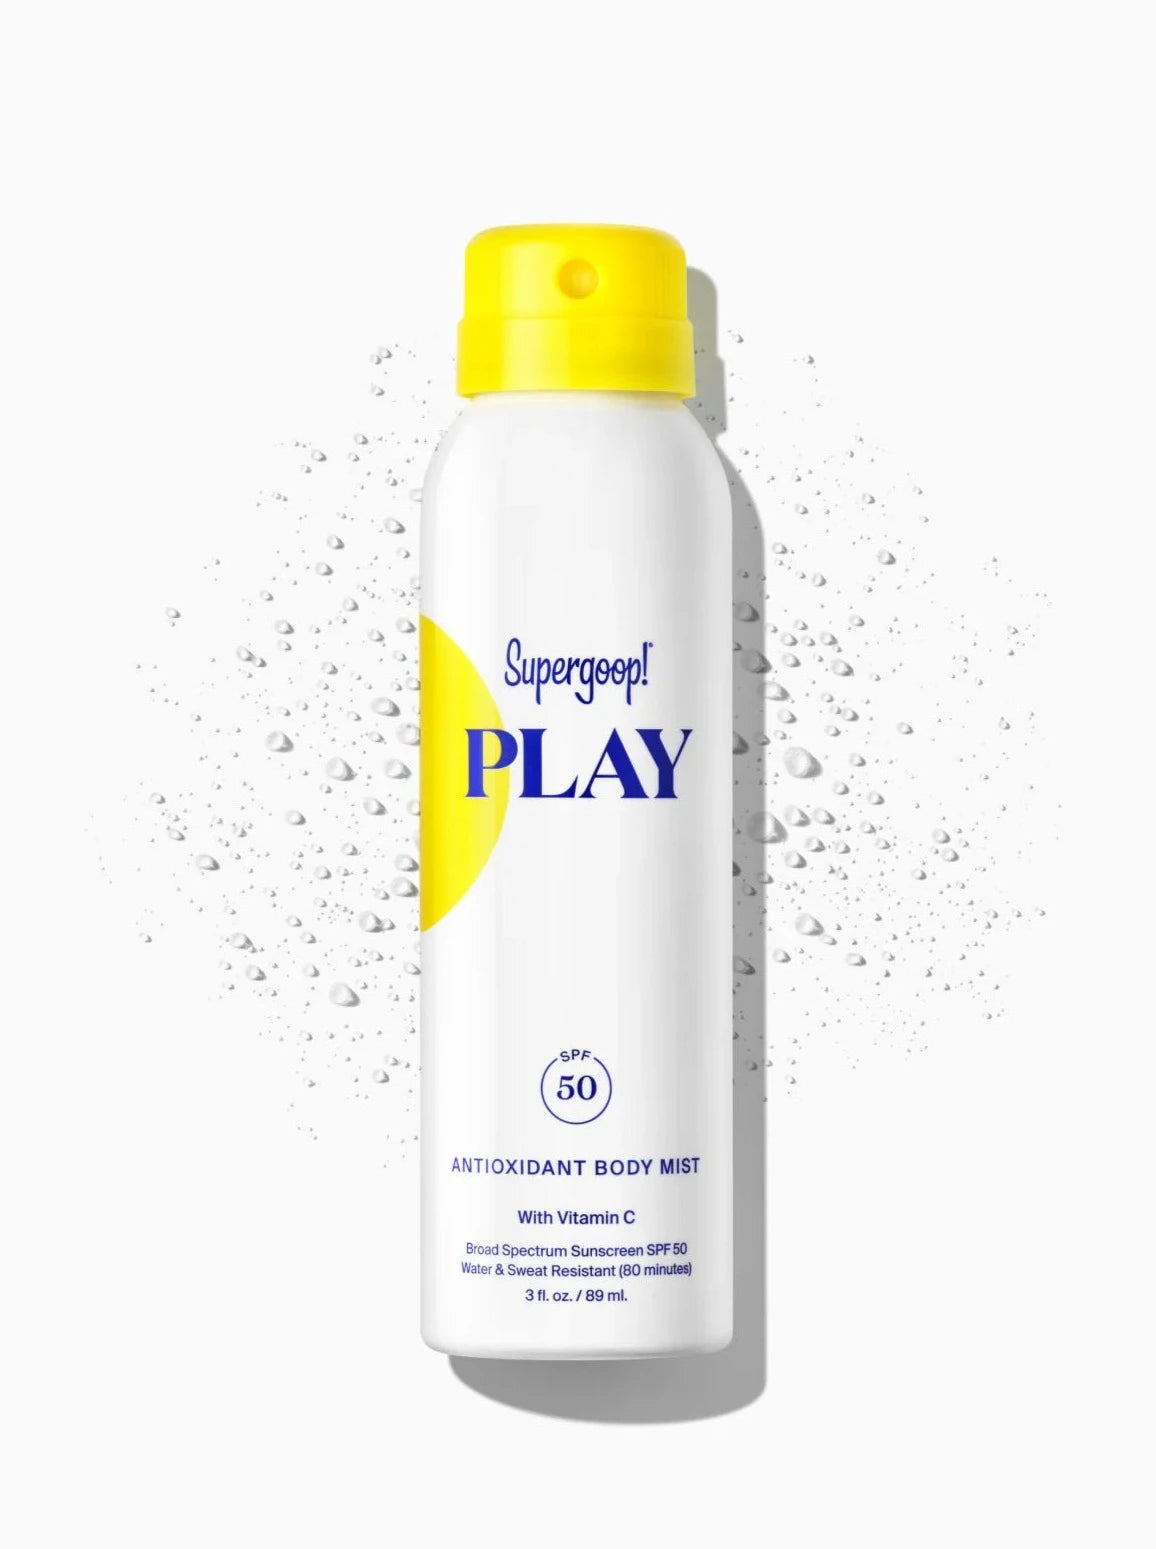 Supergoop! PLAY Antioxidant Body Mist SPF 50 with Vitamin C - 30A Gear - novelty misc